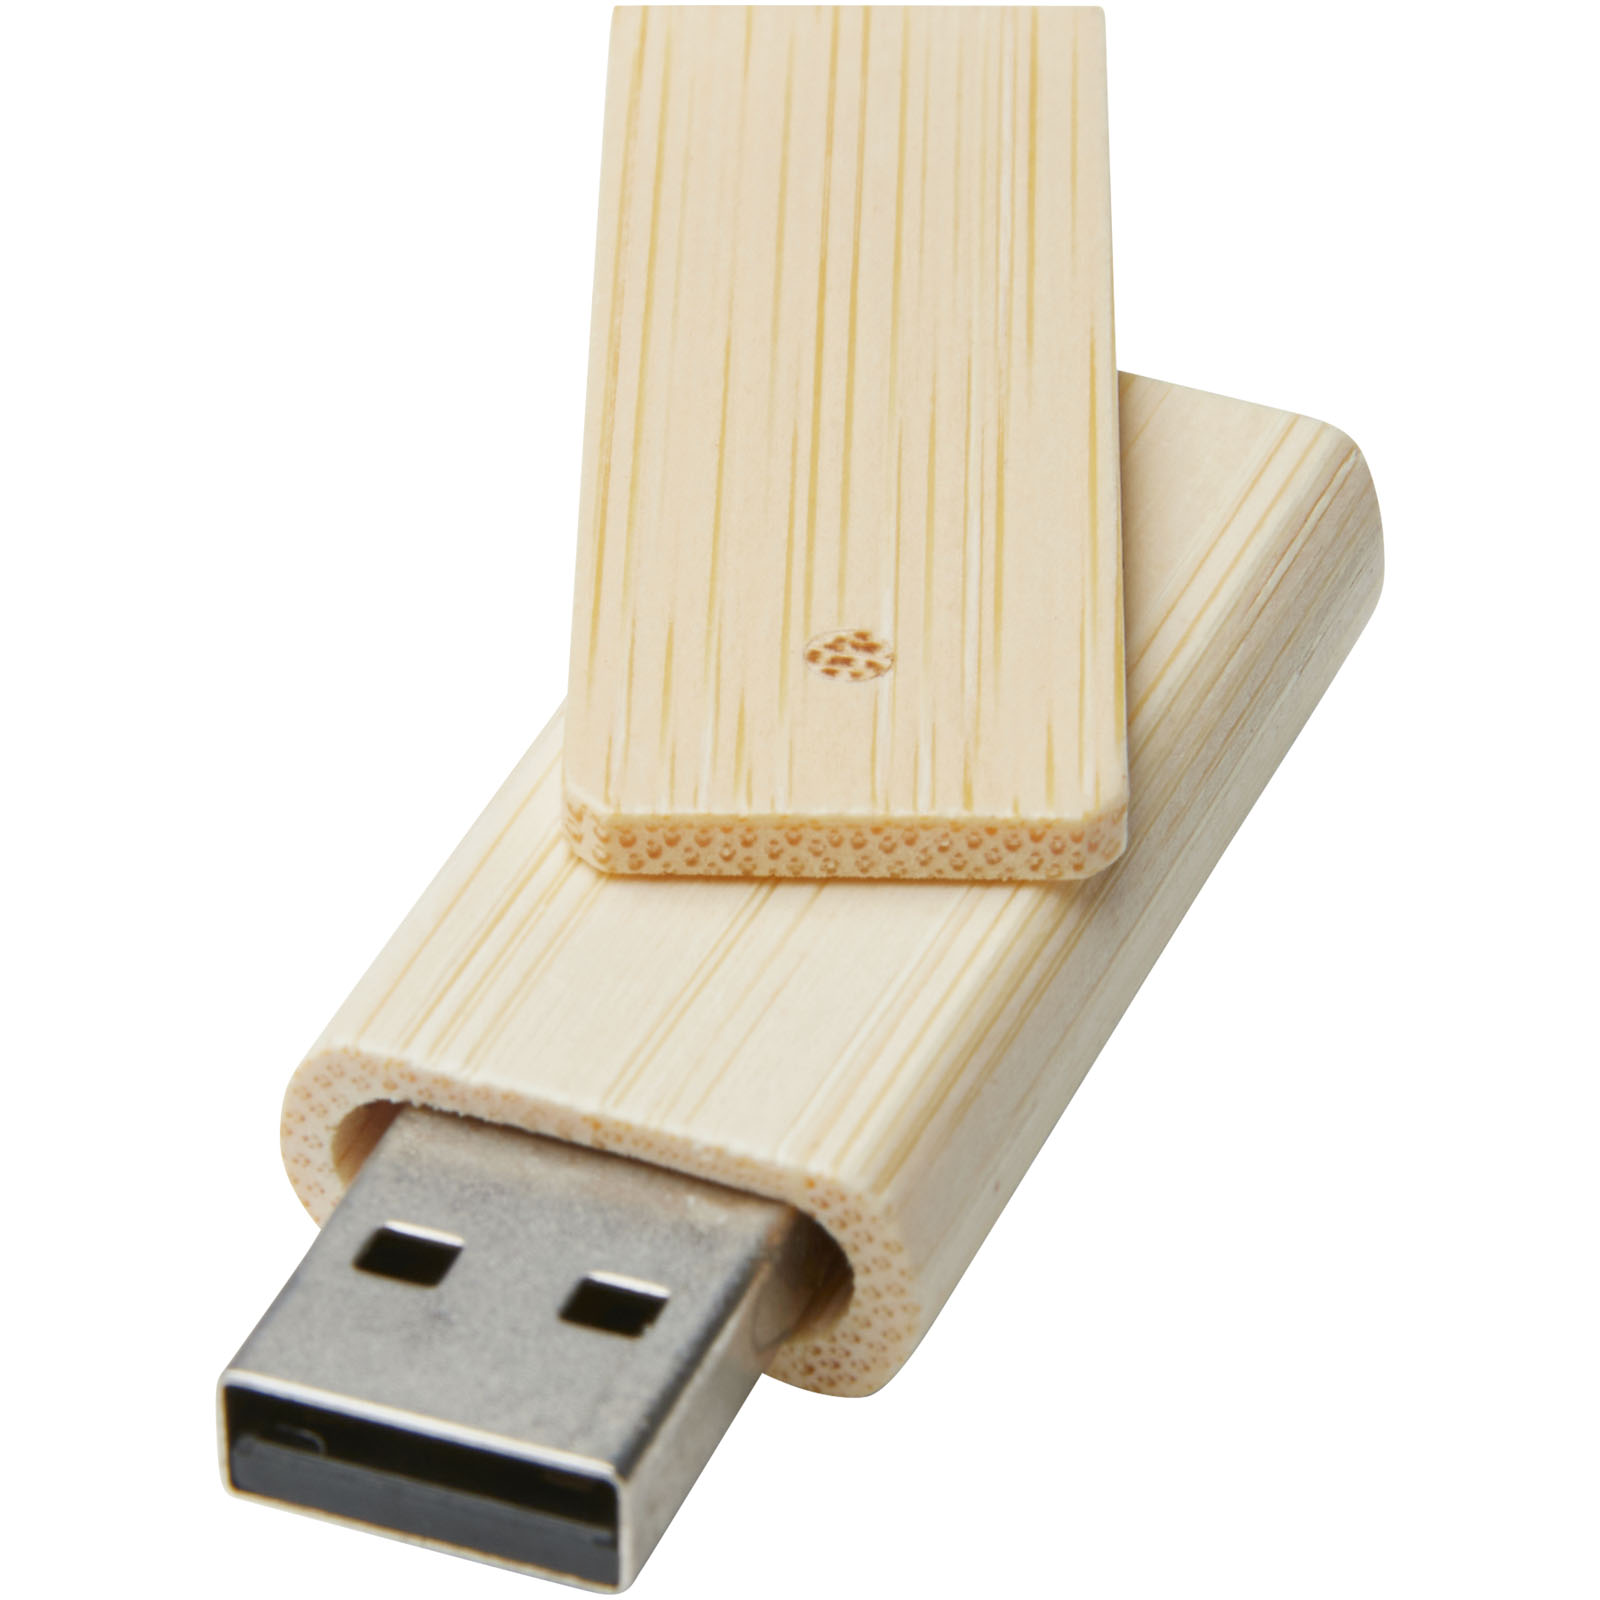 Clés USB - Clé USB Rotate 4 Go en bambou